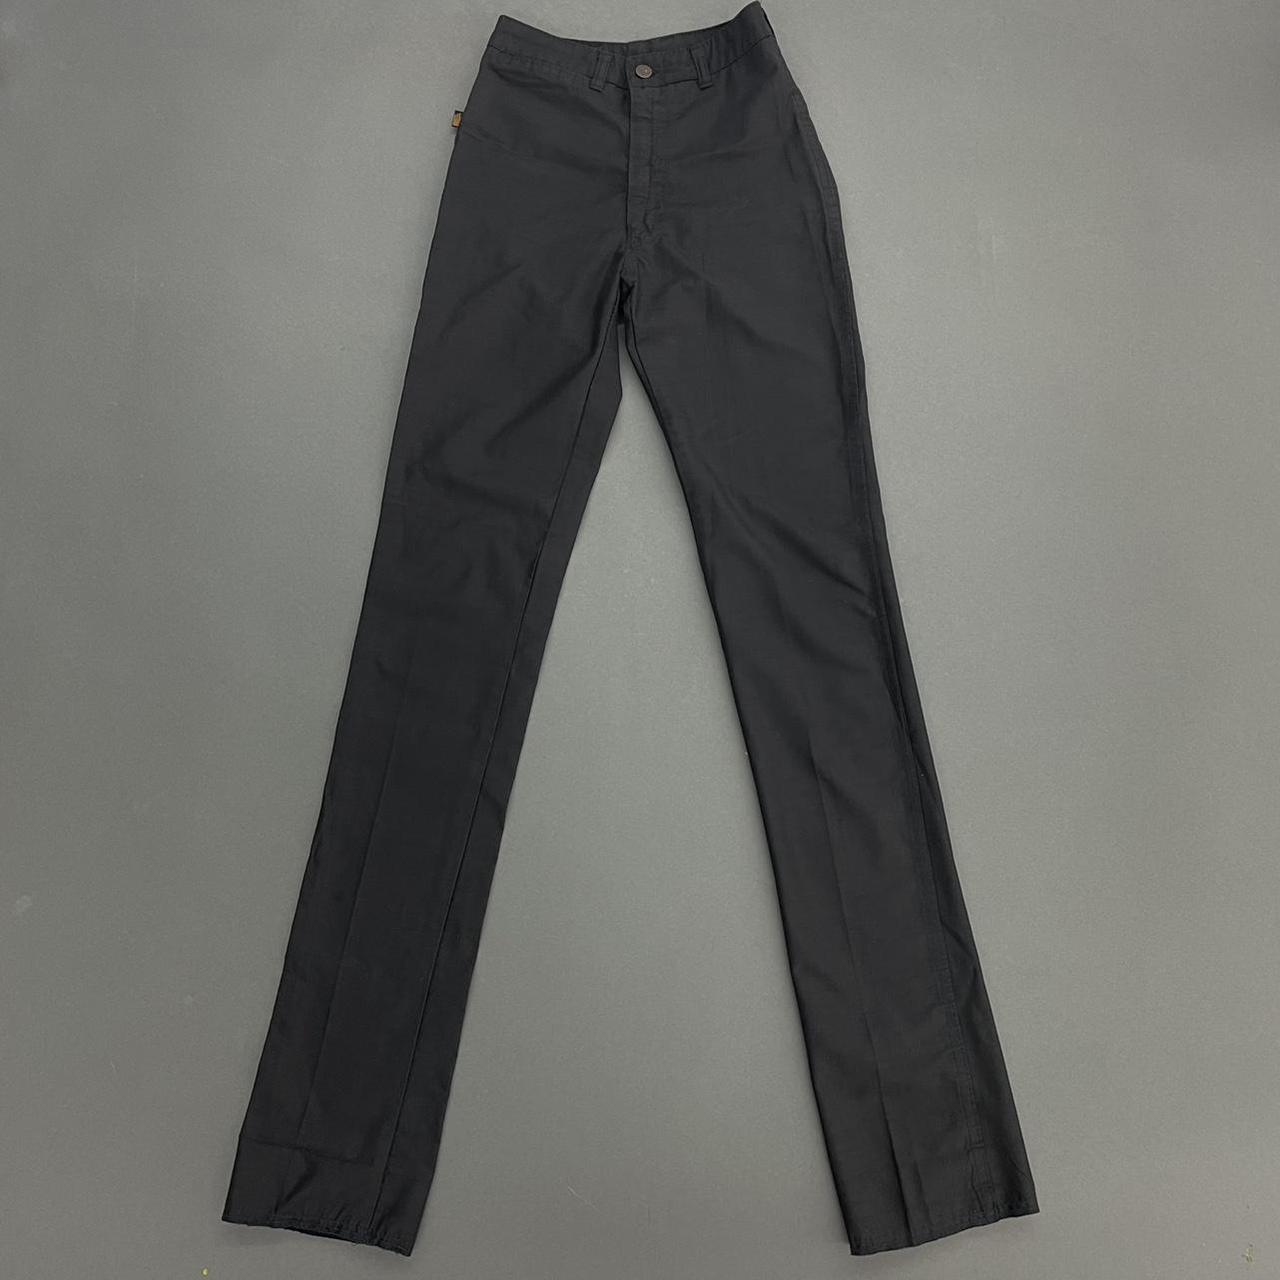 Vintage 90s Black Slim Fit Trousers by Sasson - 24”... - Depop